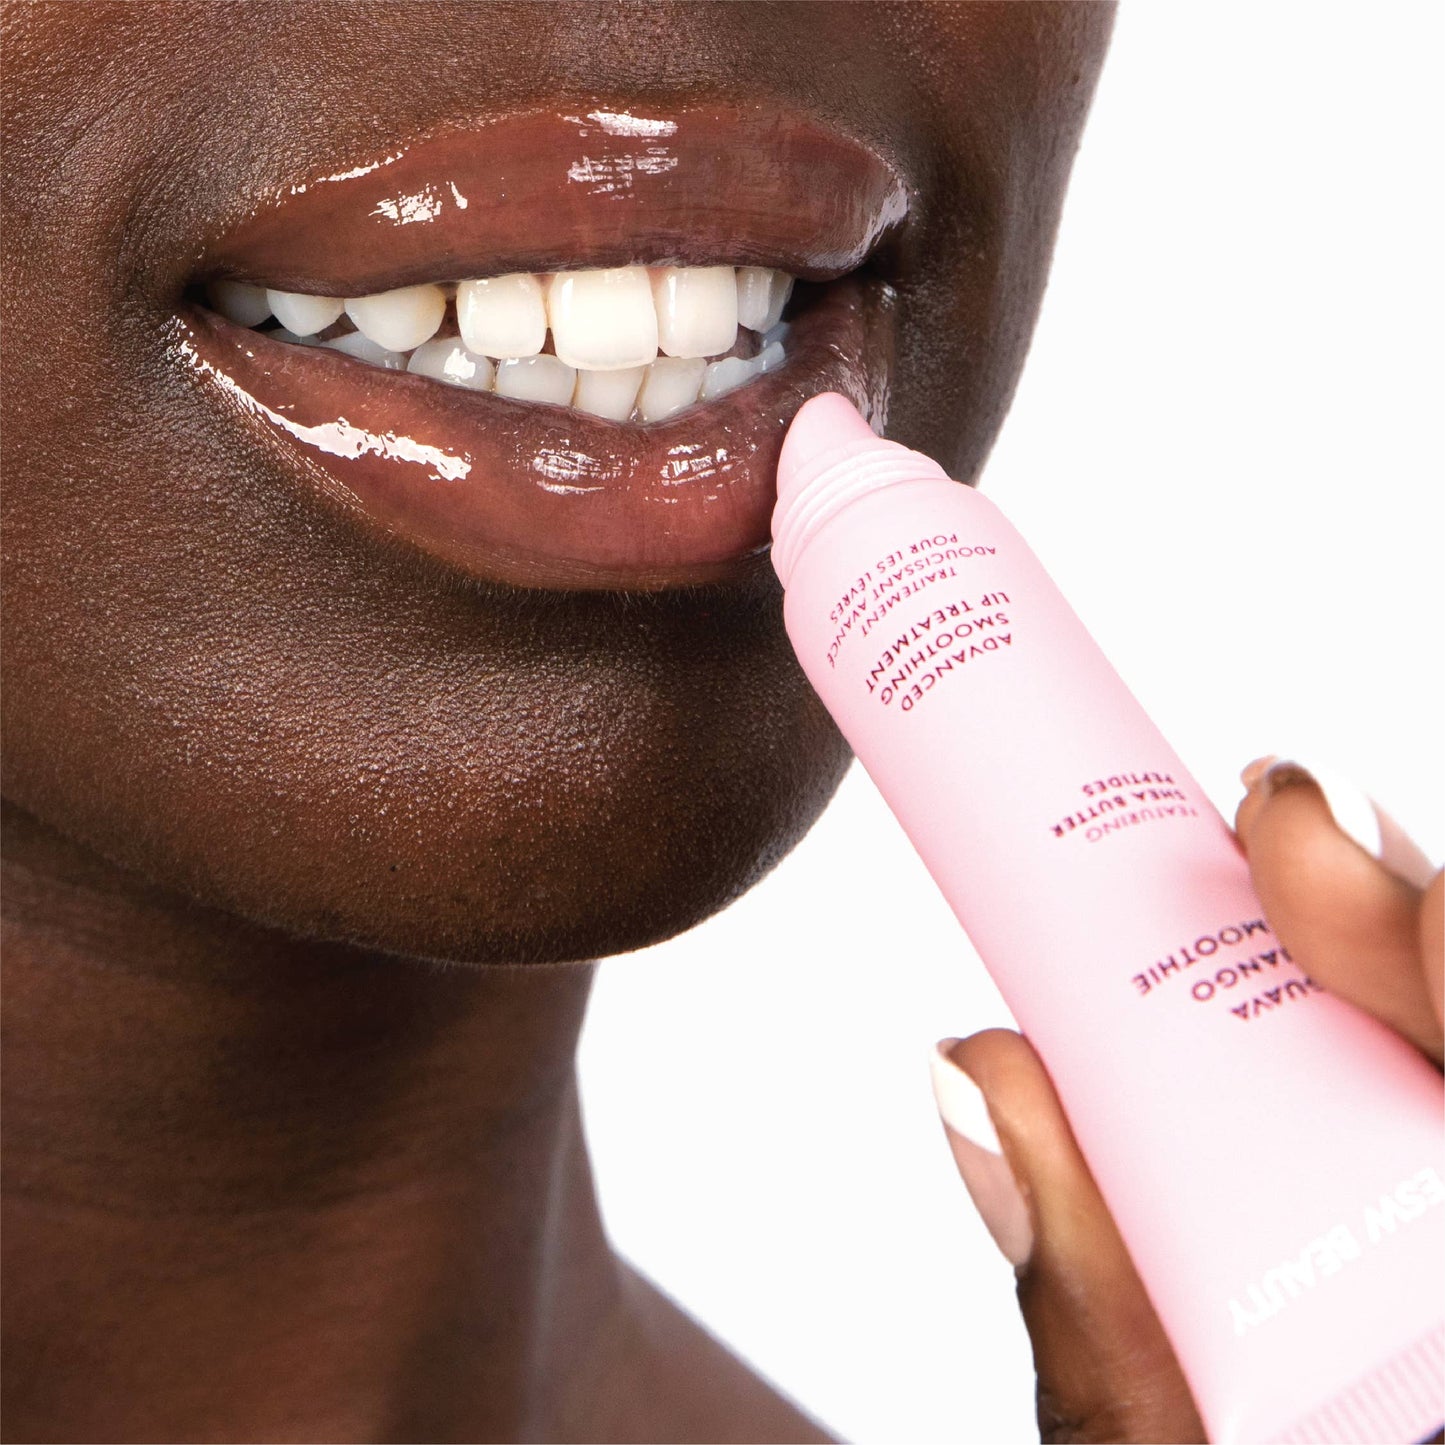 ESW Beauty - Guava Mango Smoothie Advanced Smoothing Lip Treatment